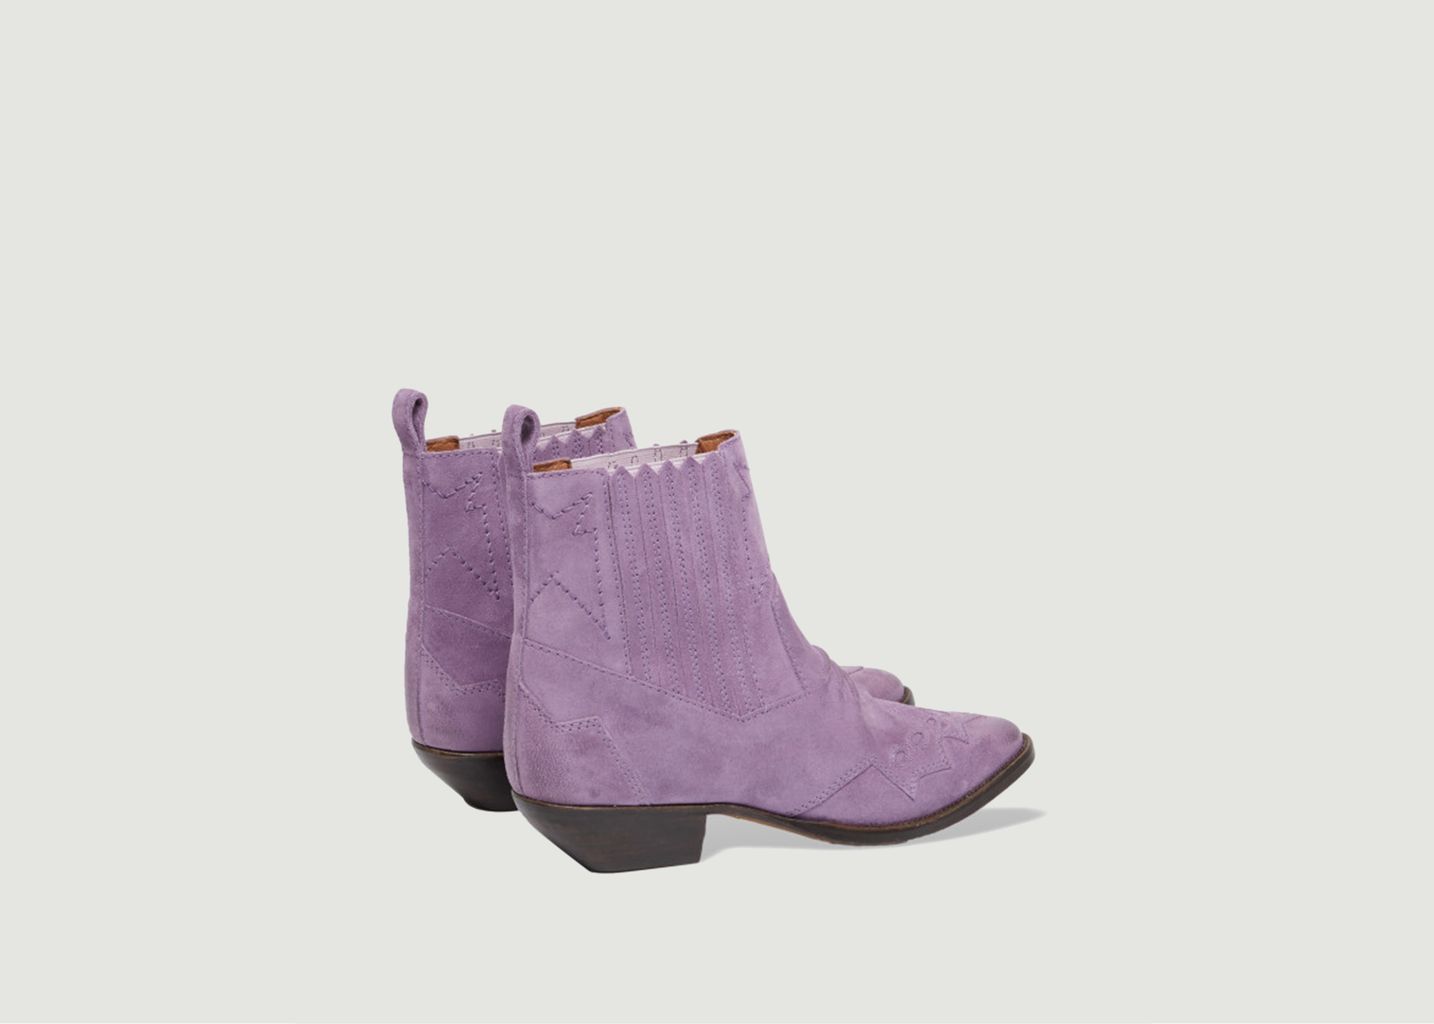 Tucson leather boots - Roseanna